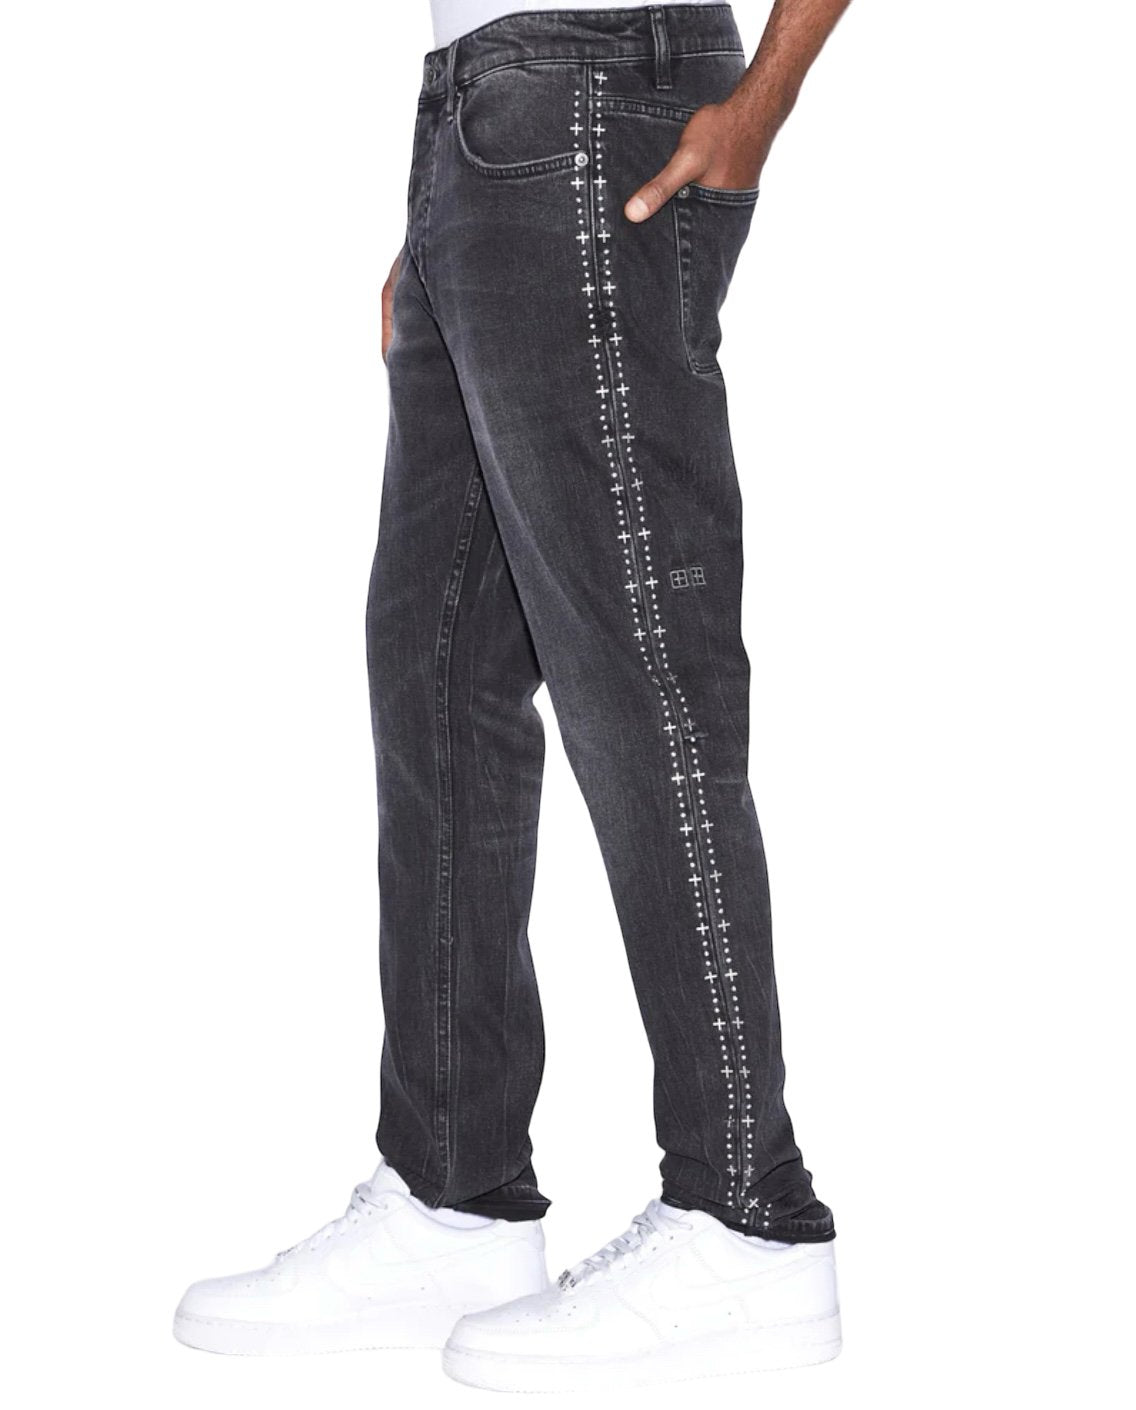 A man wearing a pair of Ksubi Jeans Chitch Metalik Stripe Black and white sneakers.